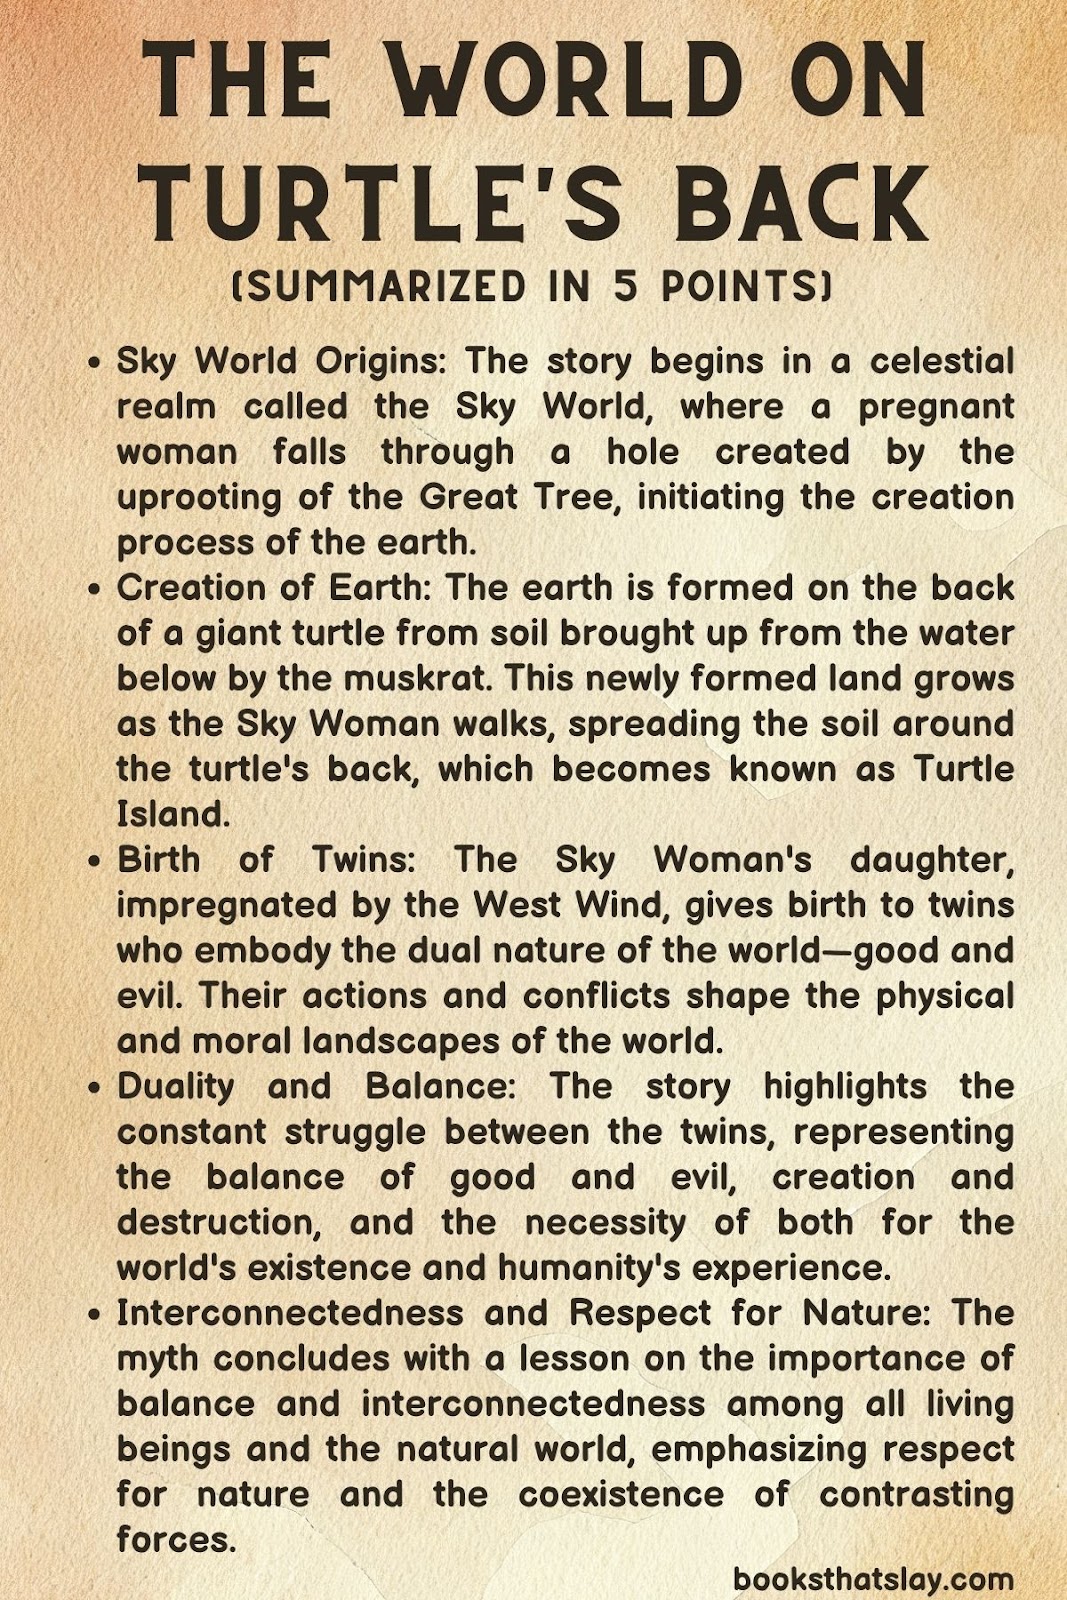 The World on Turtle's Back Summary